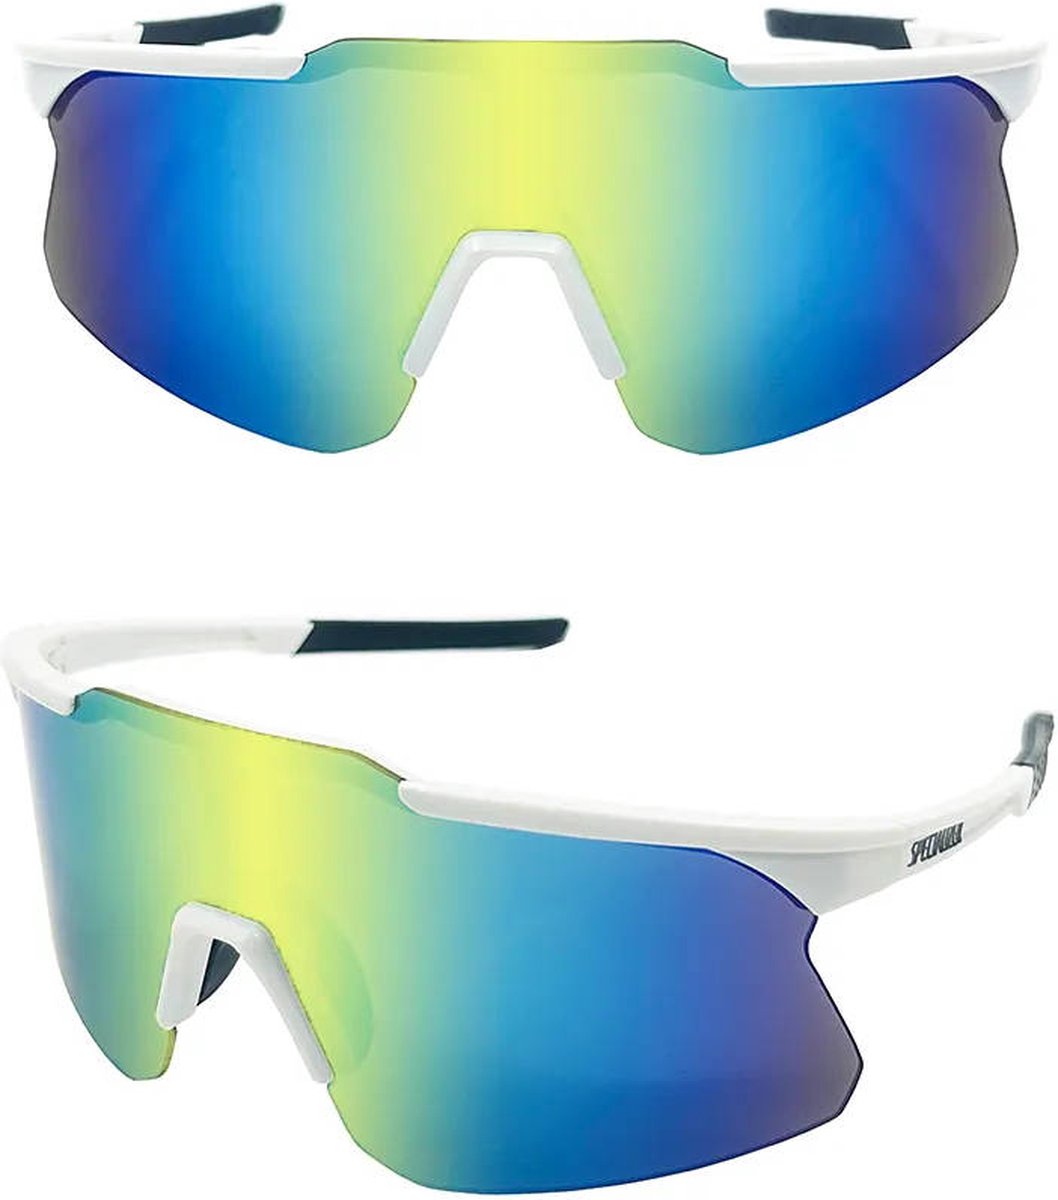 Specialized Fietsbril - Racefiets - Sportbril - Mountainbike - Unisex - UV-bescherming - 155mm - Wit Goud